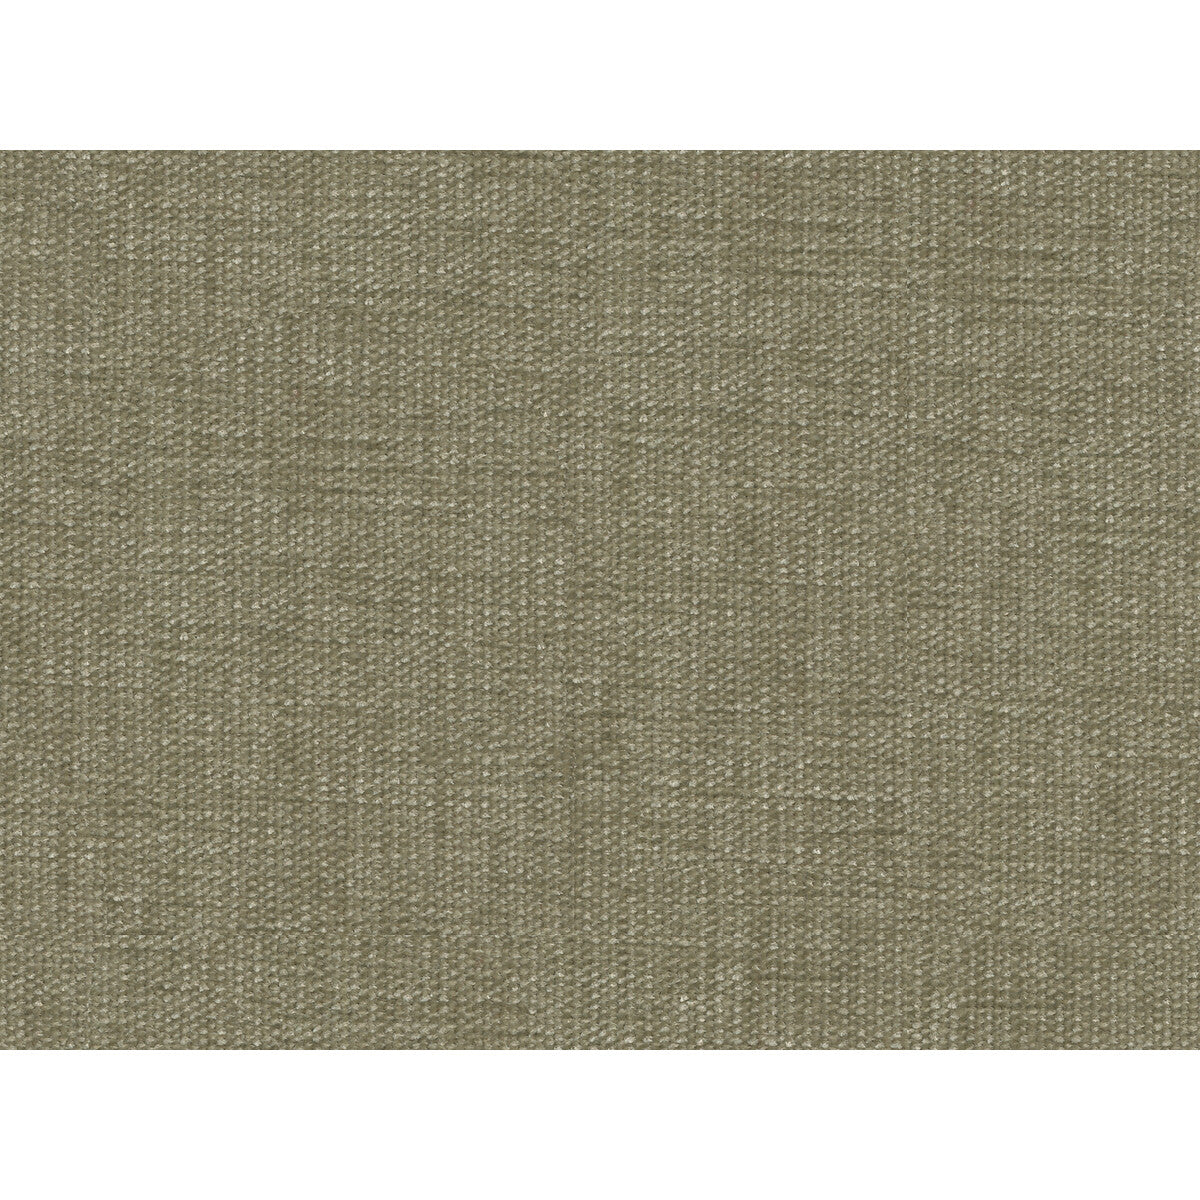 Kravet Smart fabric in 34959-161 color - pattern 34959.161.0 - by Kravet Smart in the Performance Kravetarmor collection